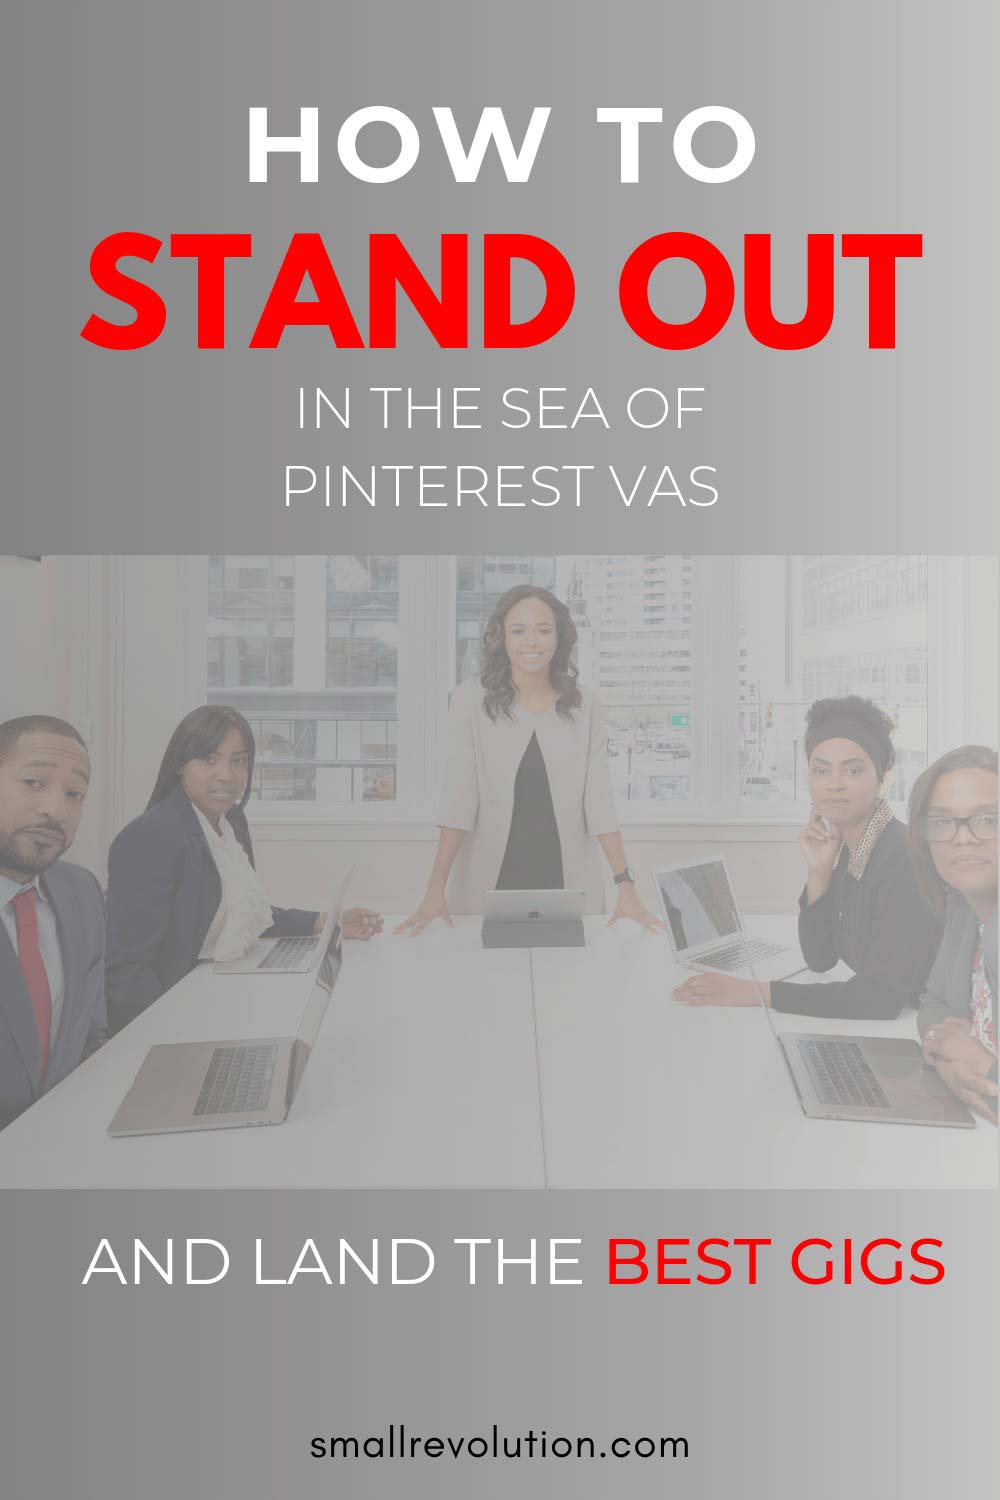 Pinterest VAs doing presentation to clients